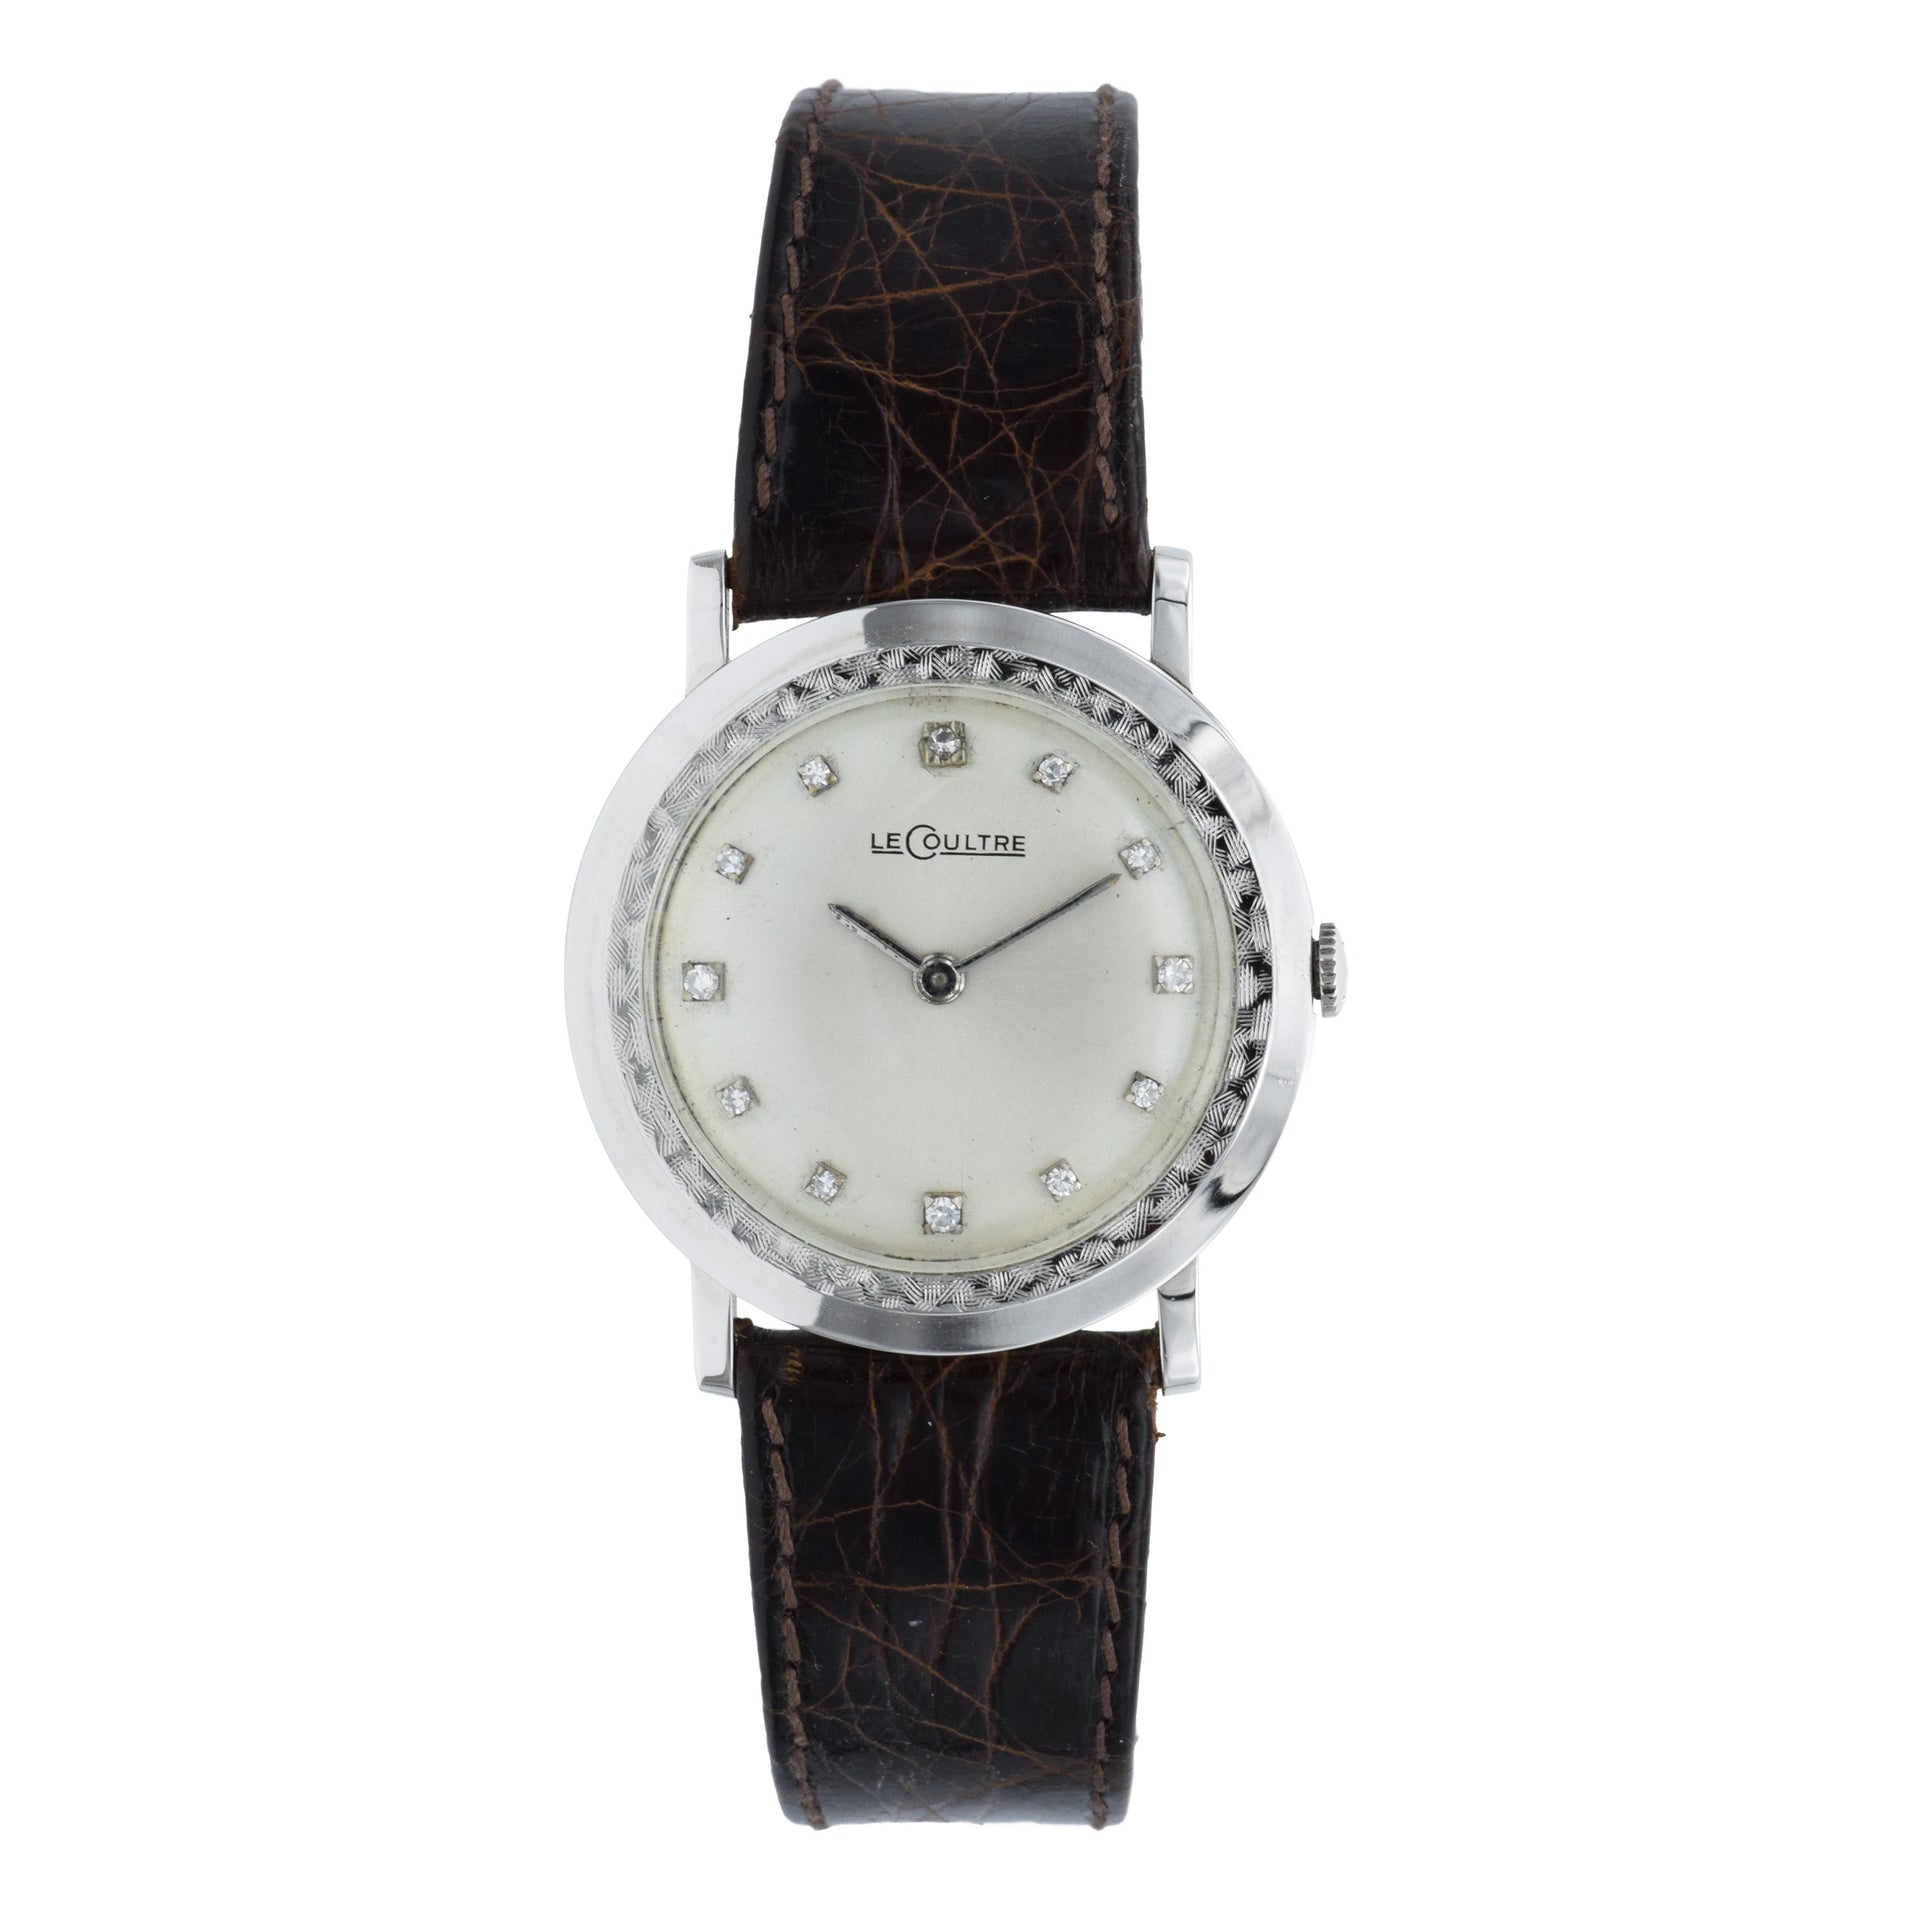 Vintage 1950s LeCoultre Watch